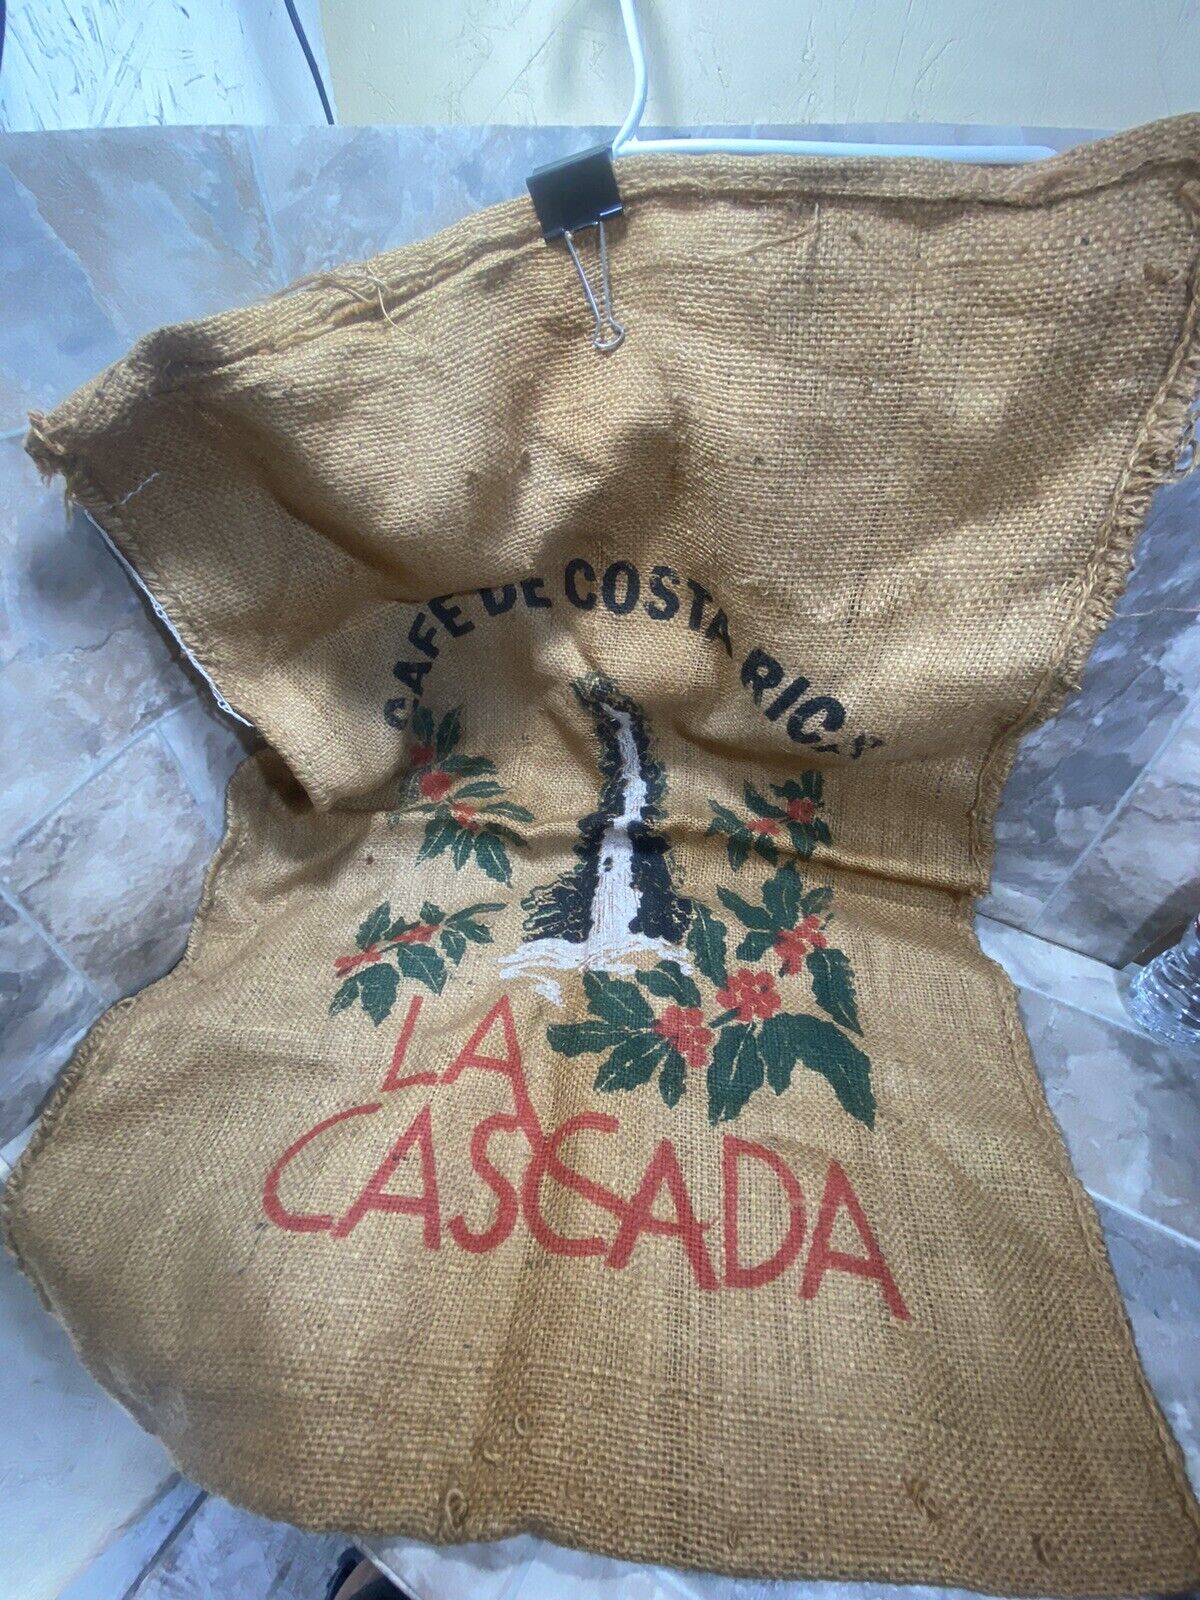 Vintage Cafe De Costa Rica Burlap Sack, 40”x28” Preowned Good